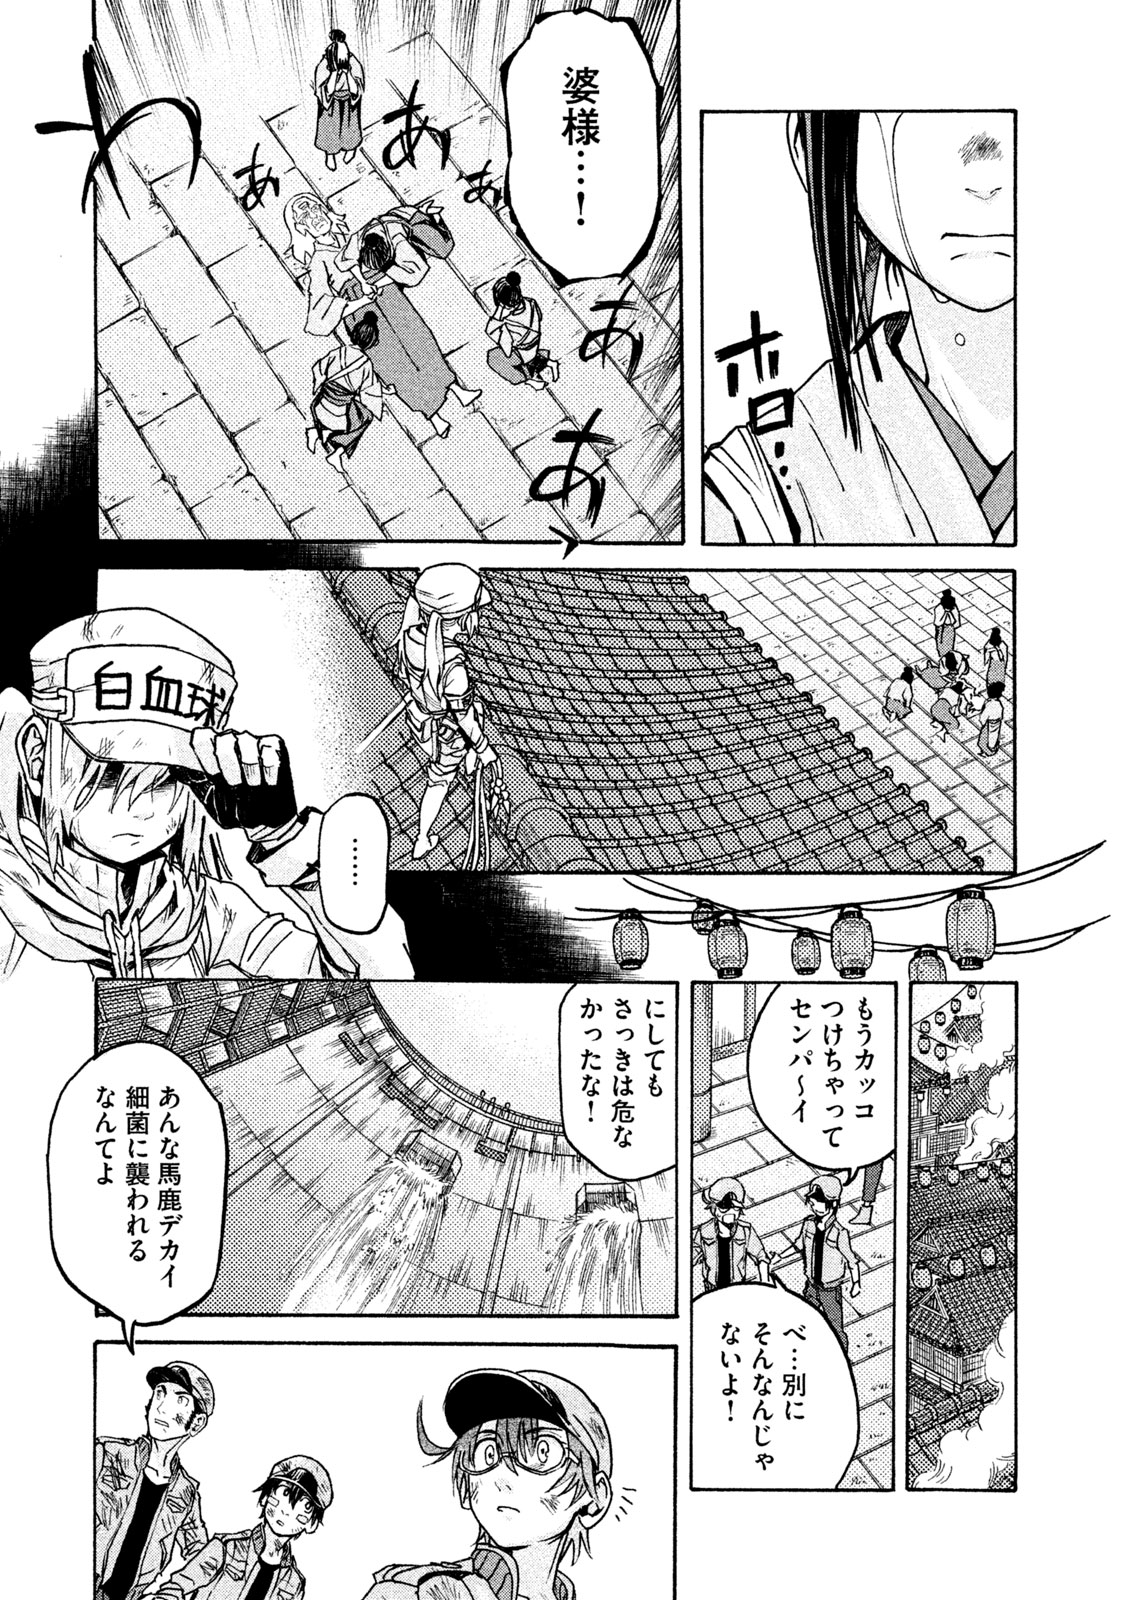 Hataraku Saibou BLACK - Chapter 14 - Page 19